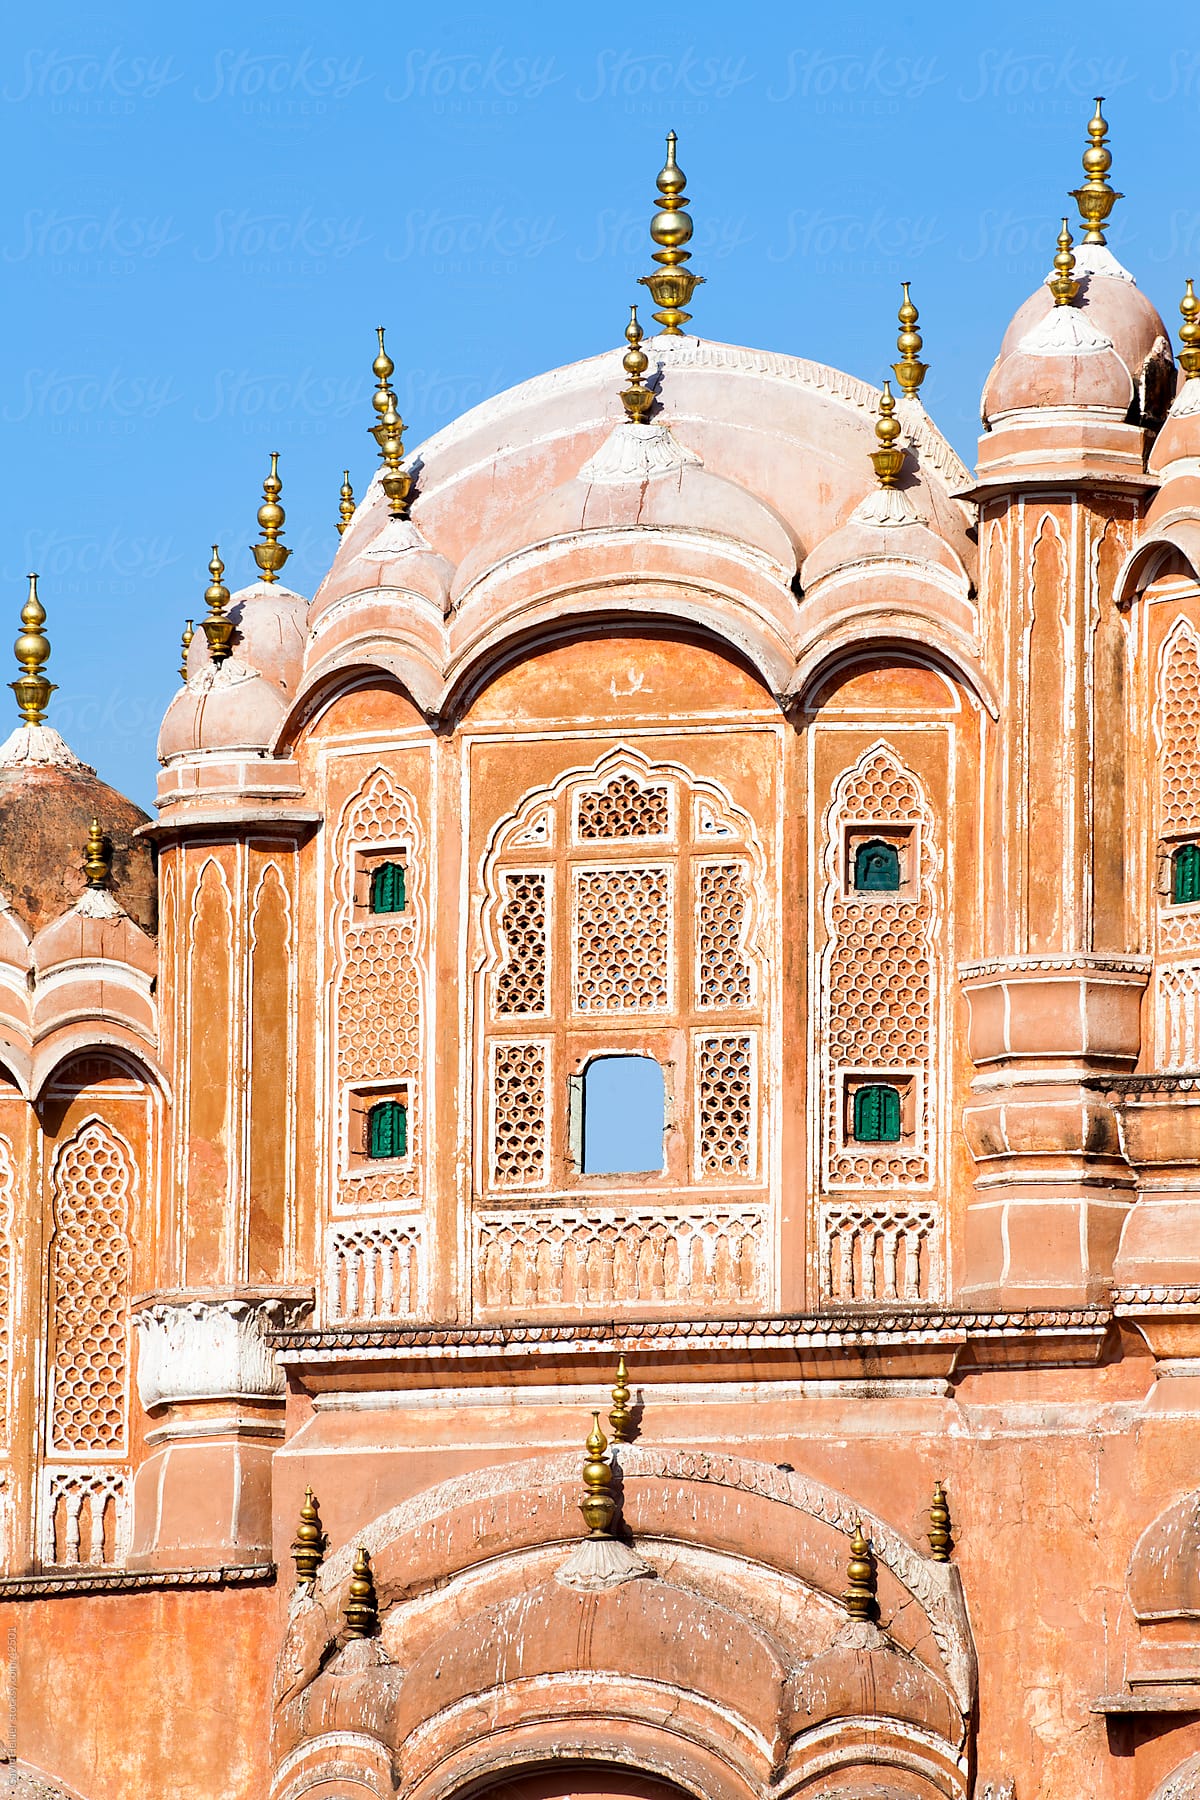 India, Rajasthan, Jaipur, Hawa Mahal, Palace of the Winds, built in 1799